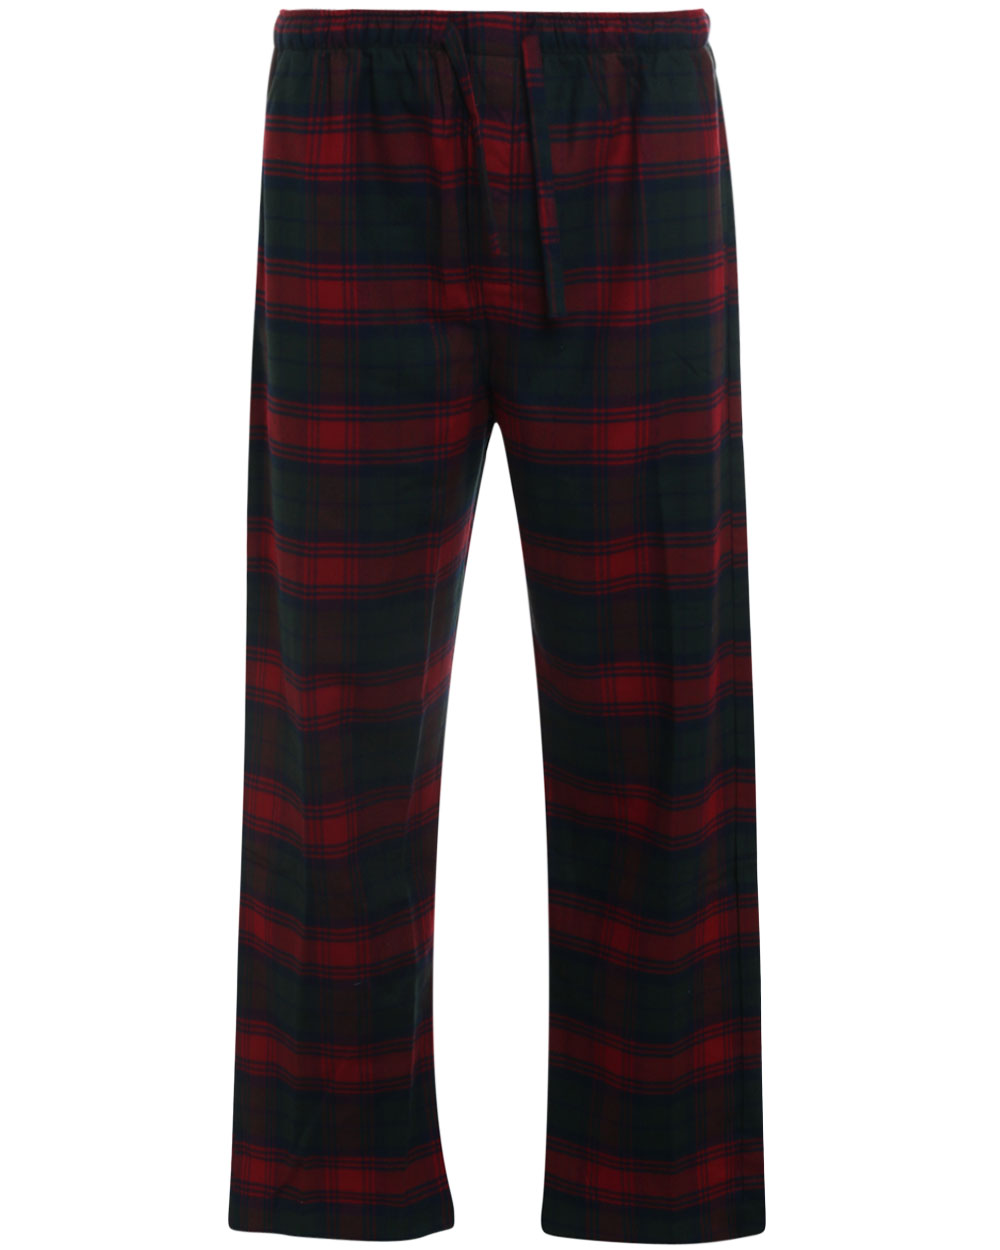 Woven Cotton Pajama Pant